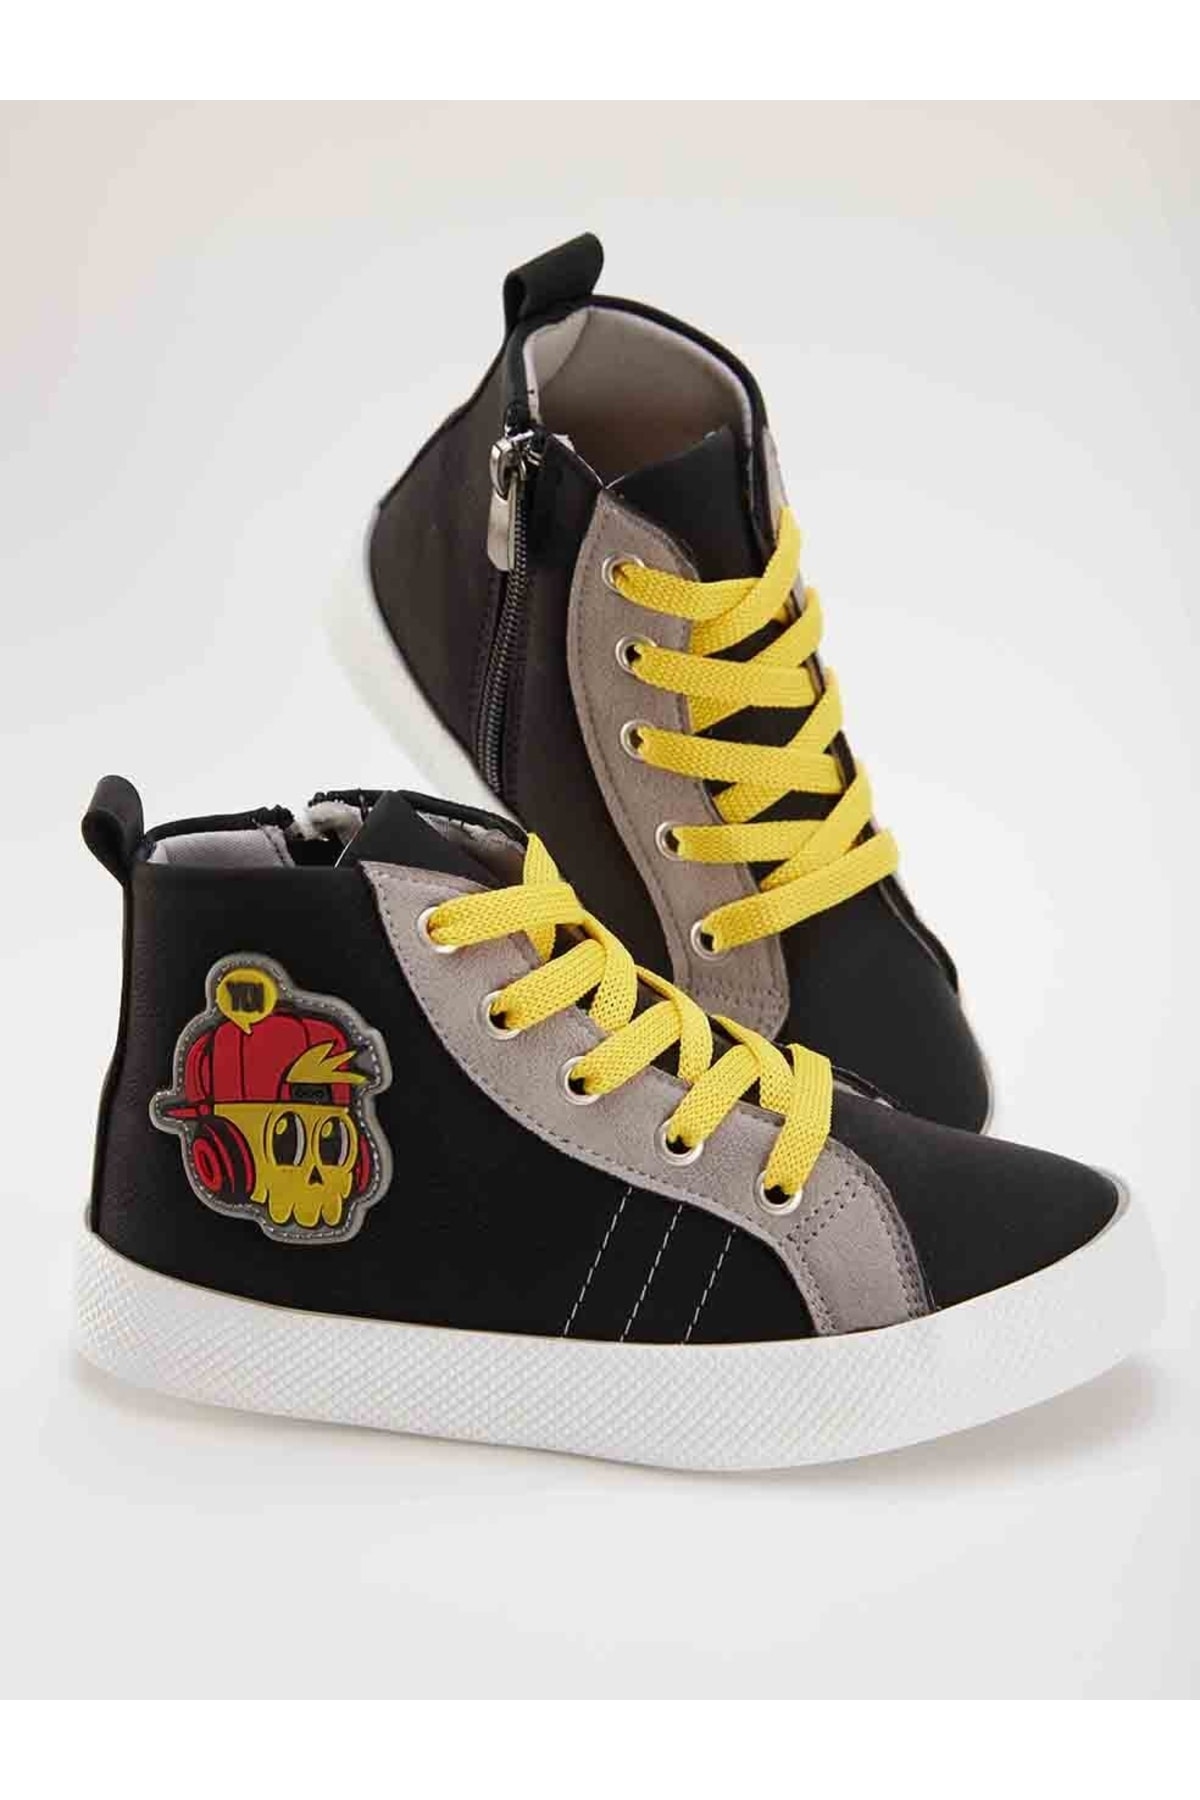 mshb&g Skull Boy Black Sneakers Sports Shoes